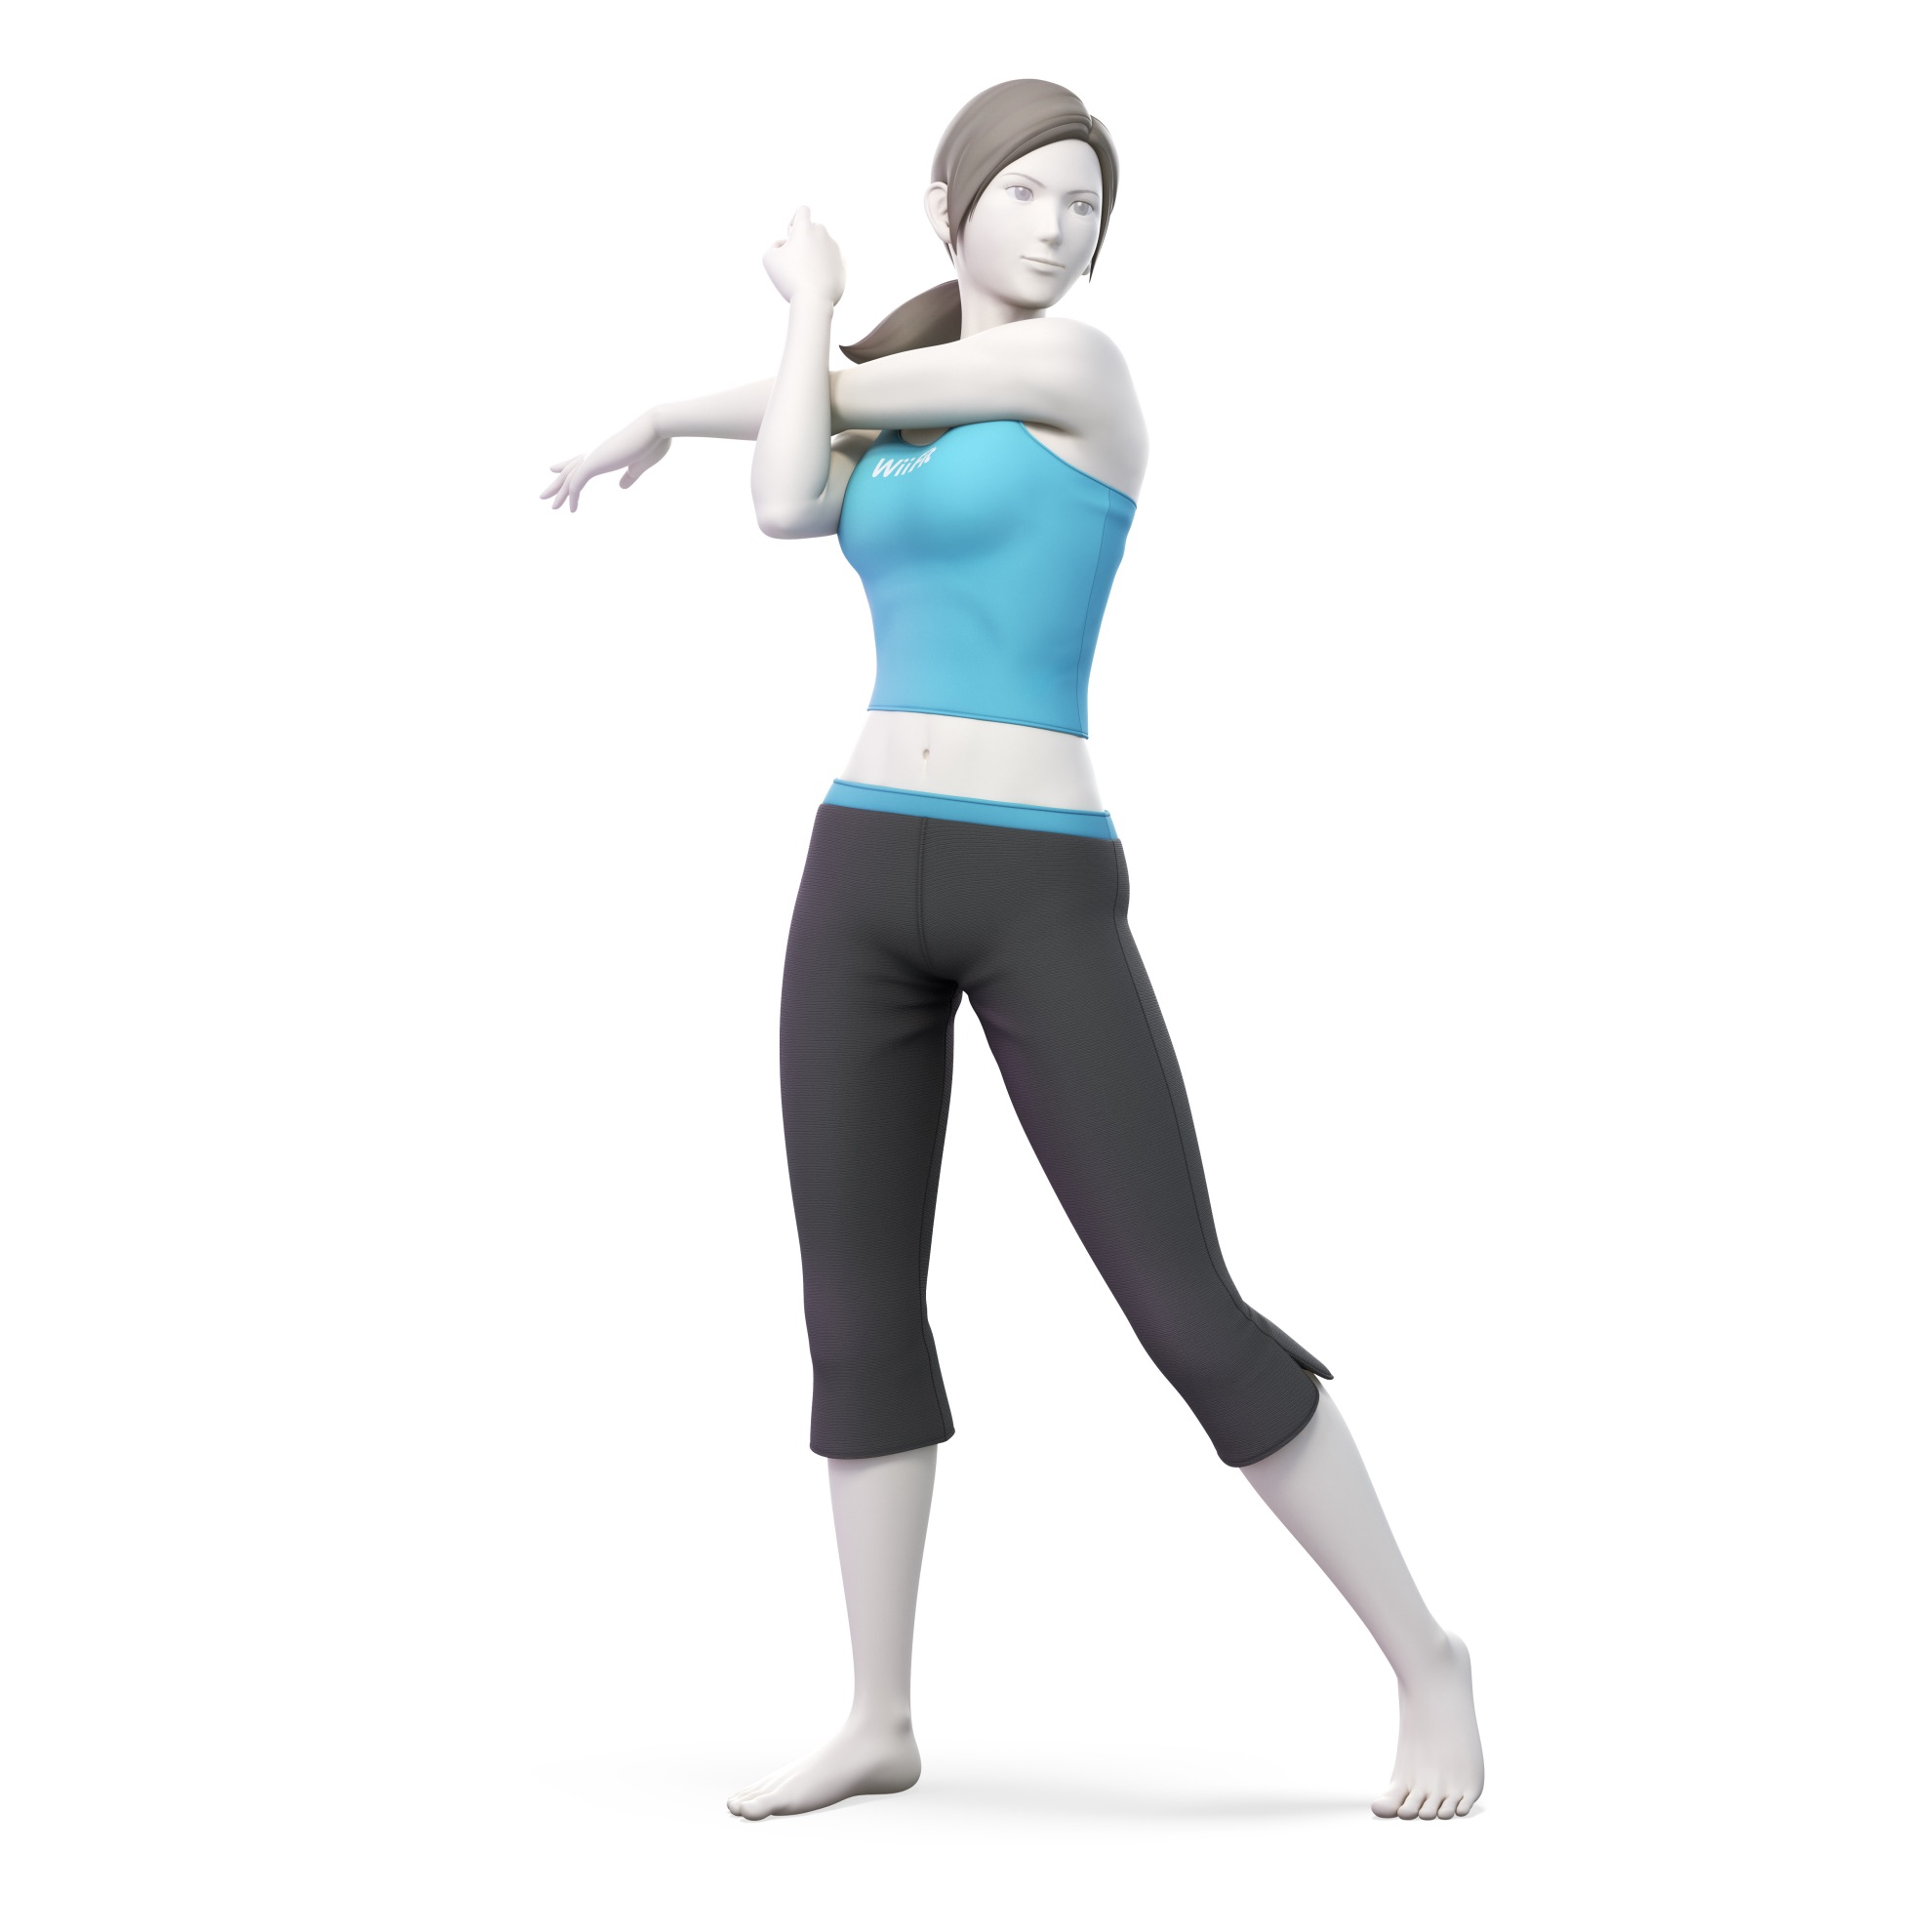 Female Wii Fit Trainer Super Smash Bros. Ultimate Character Render